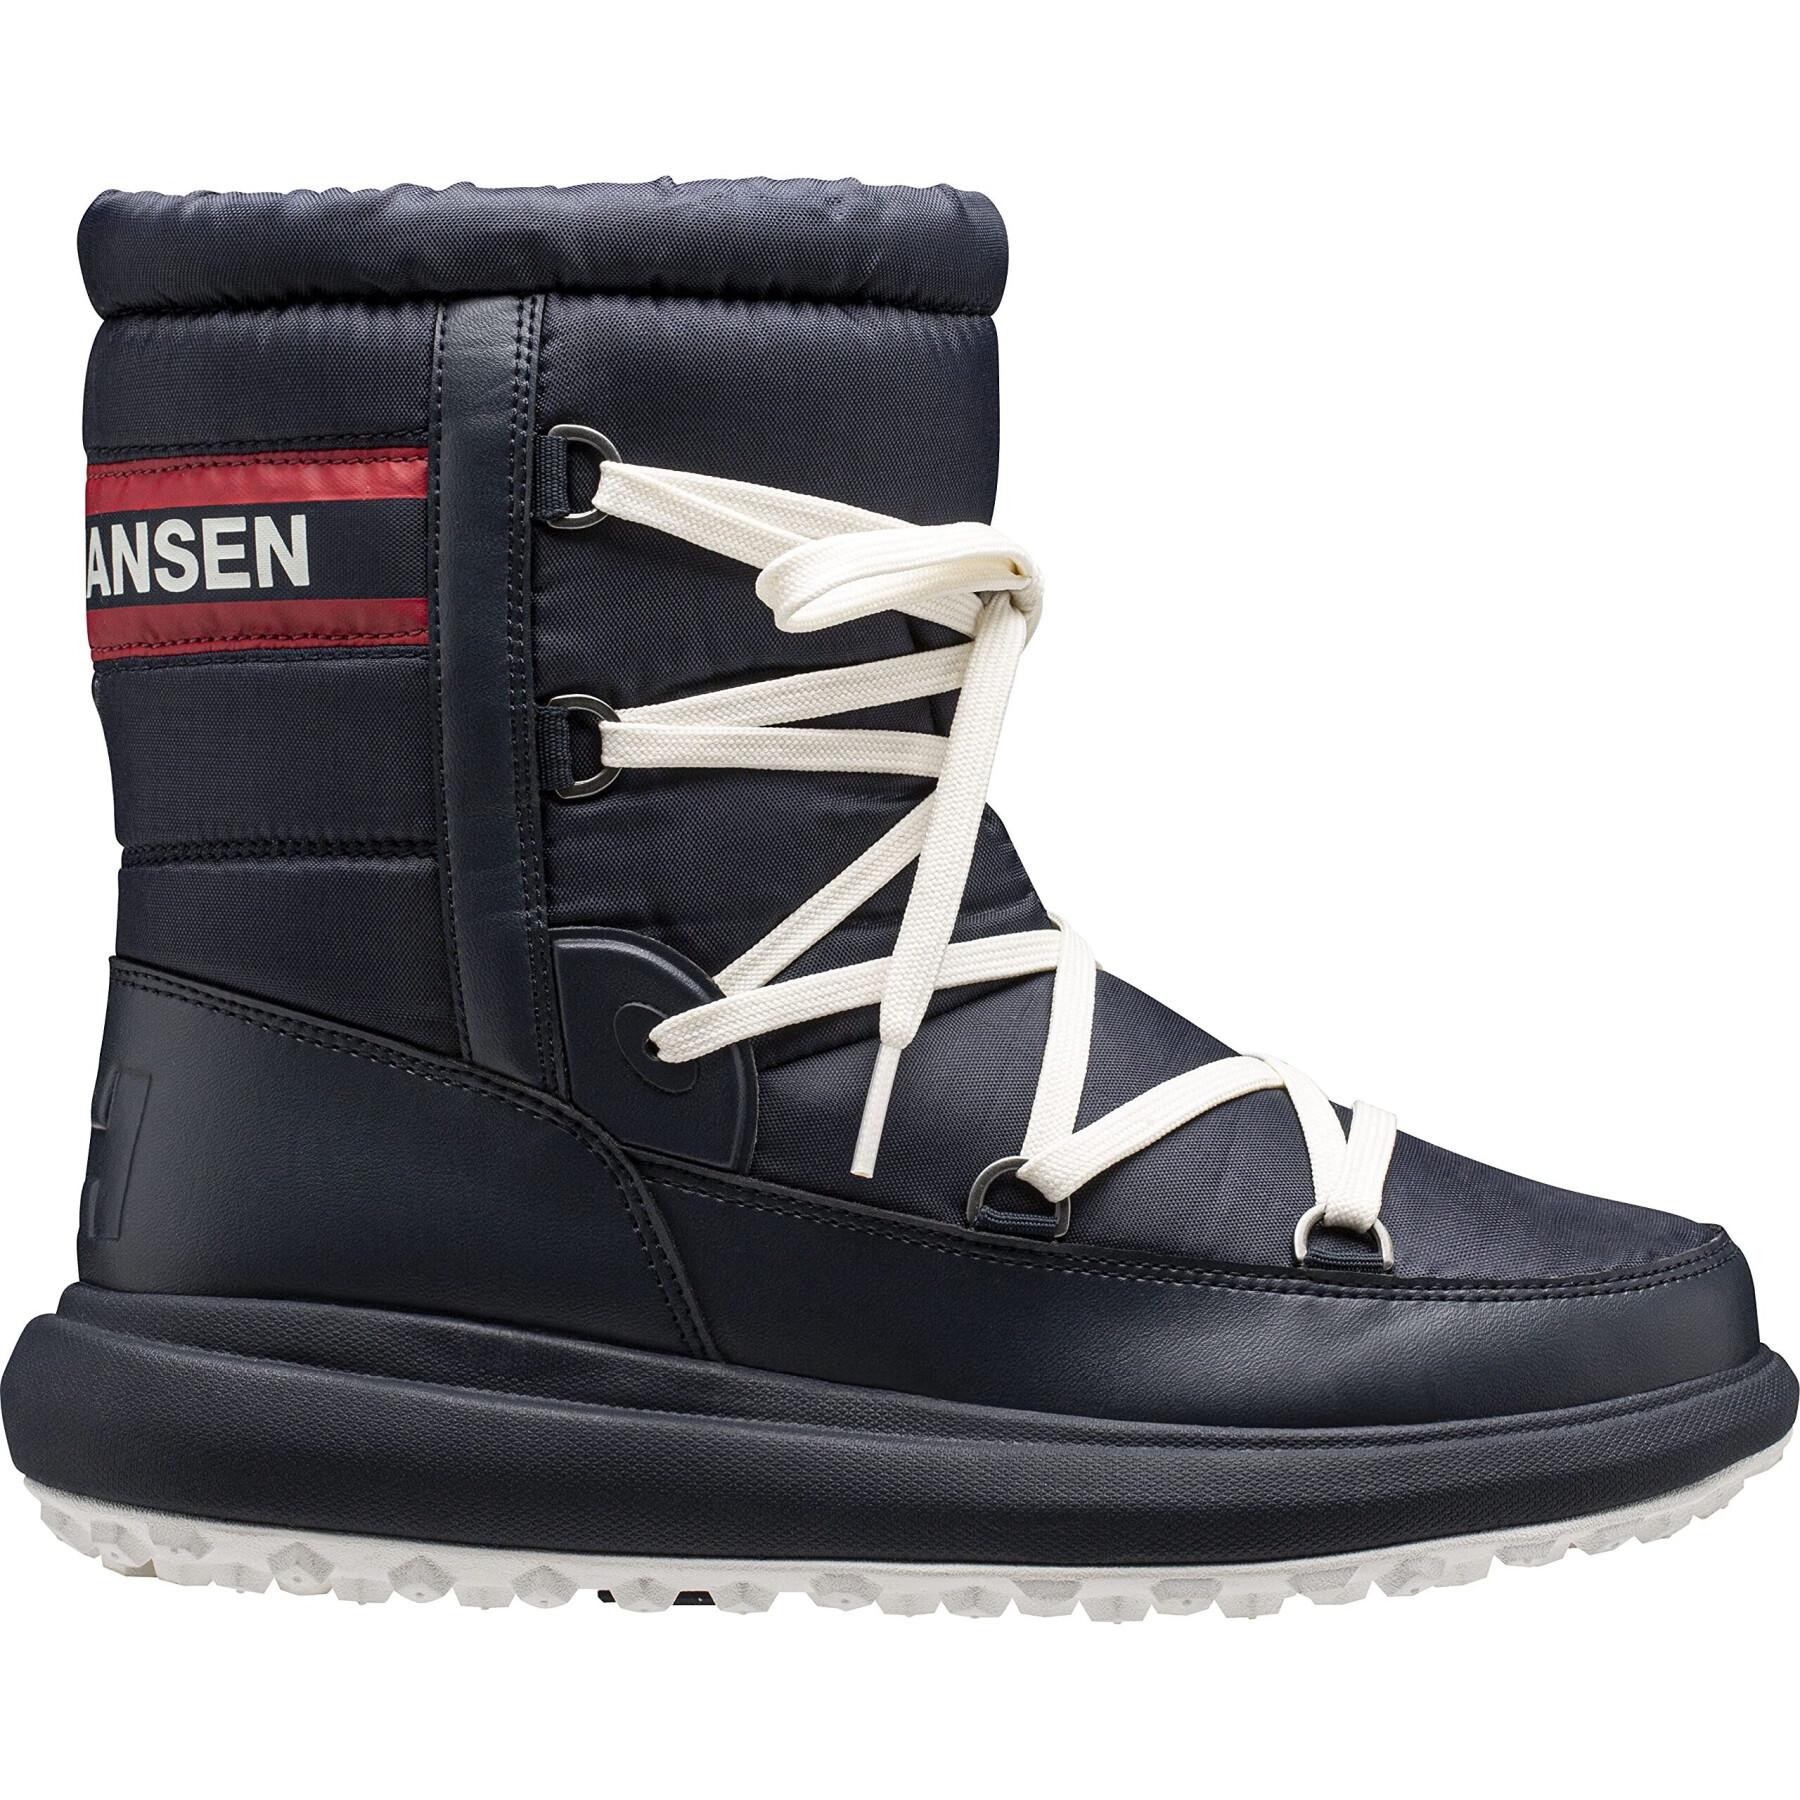 Snow boots short woman Helly Hansen Isobella